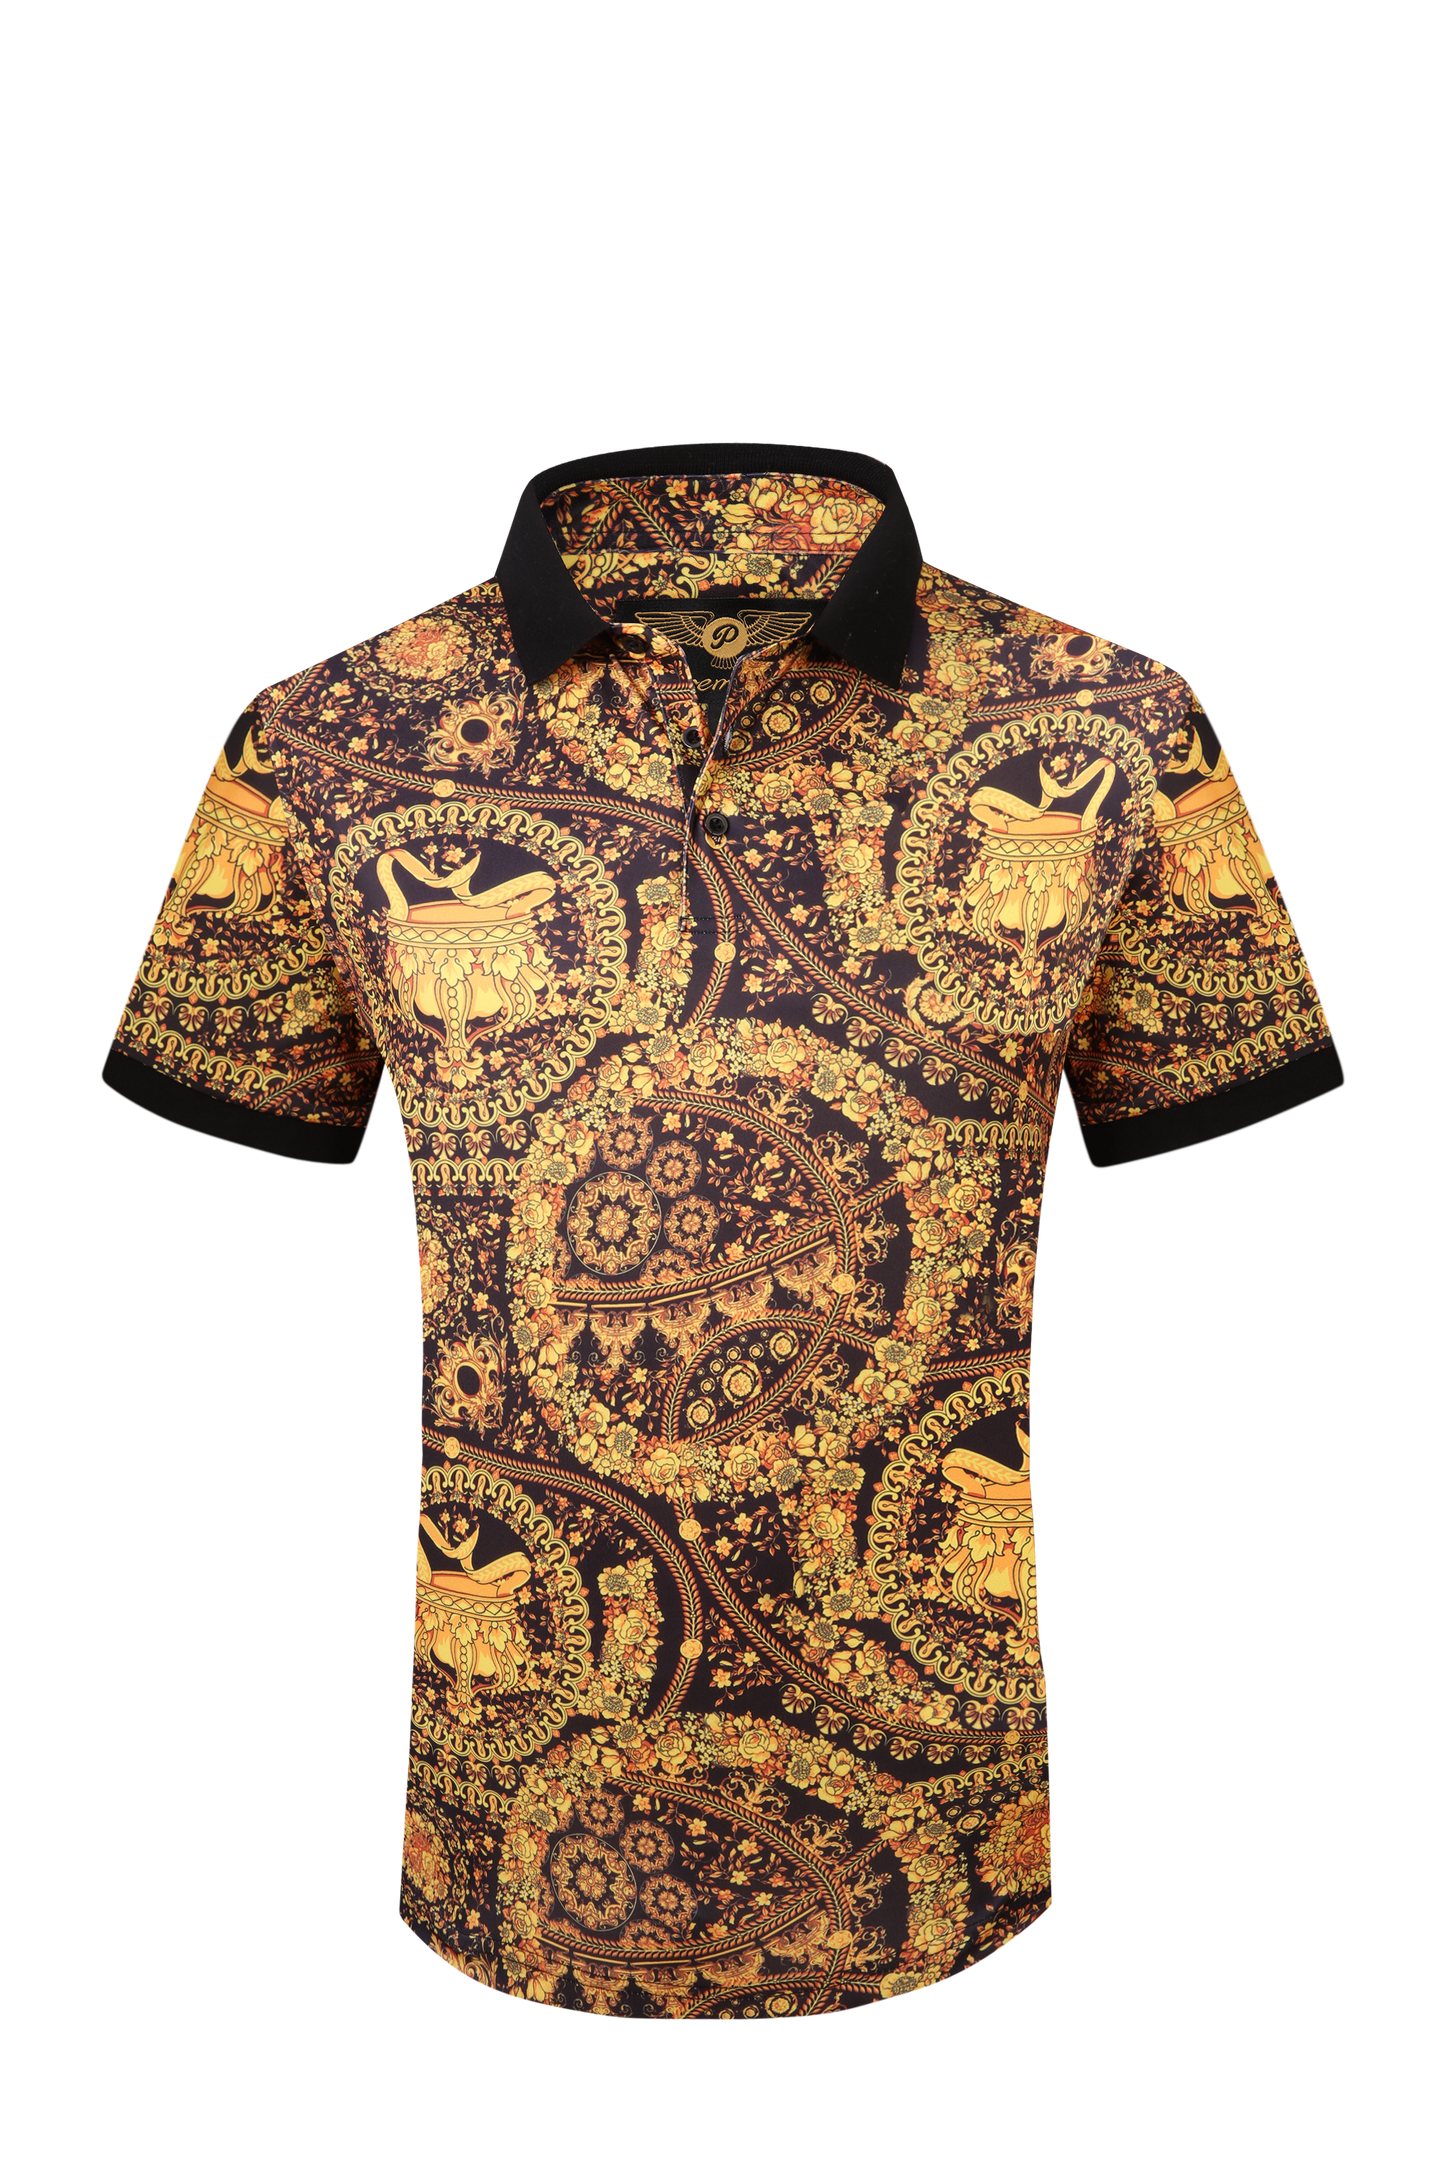 Mens Silky Premiere Polo Short Sleeve Shirt Black Gold Colorful Cown Paisley Casual Golf Shirt